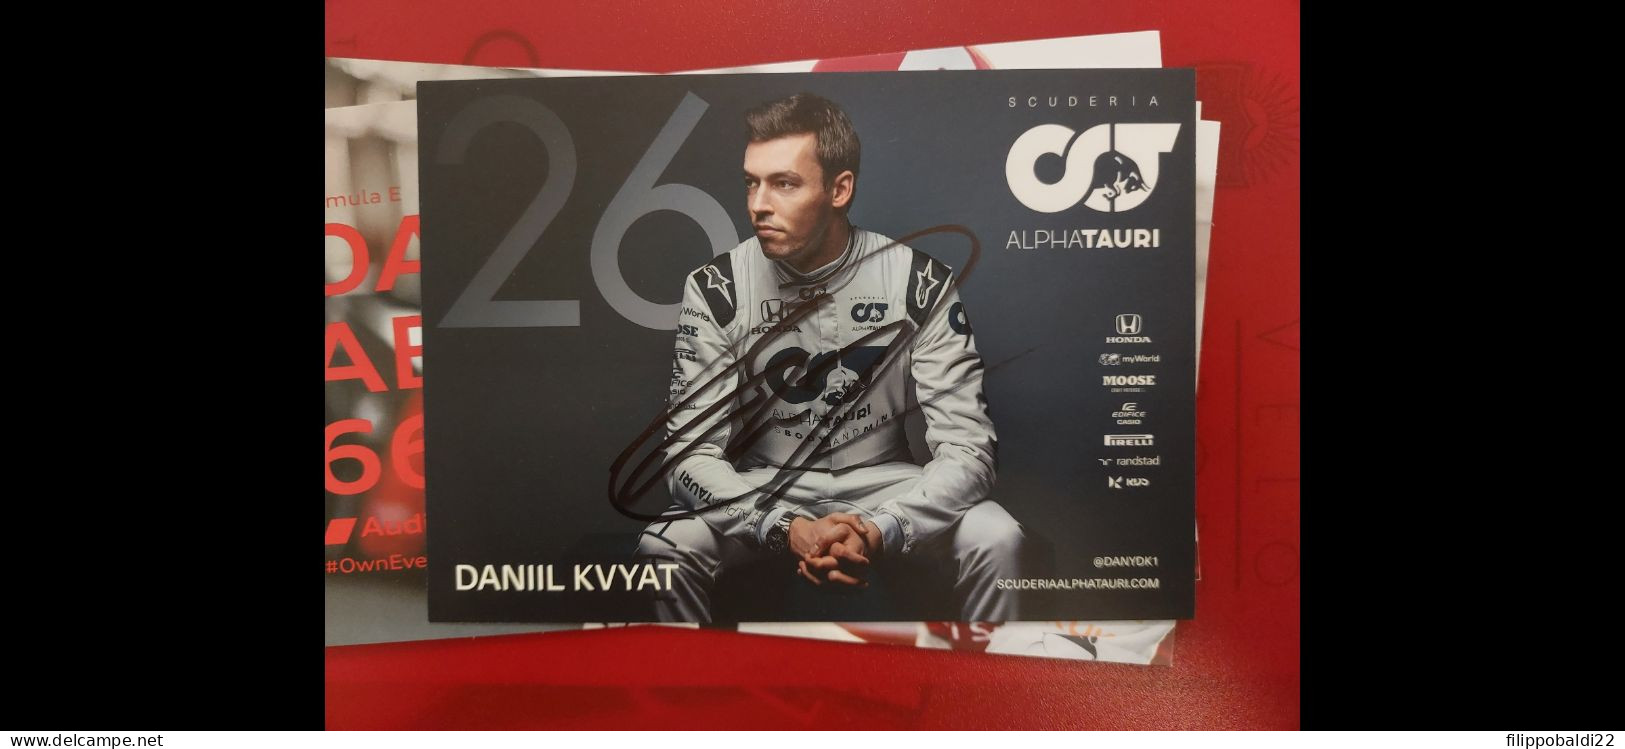 Daniil Kvyat Autografo Autograph Signed - Car Racing - F1